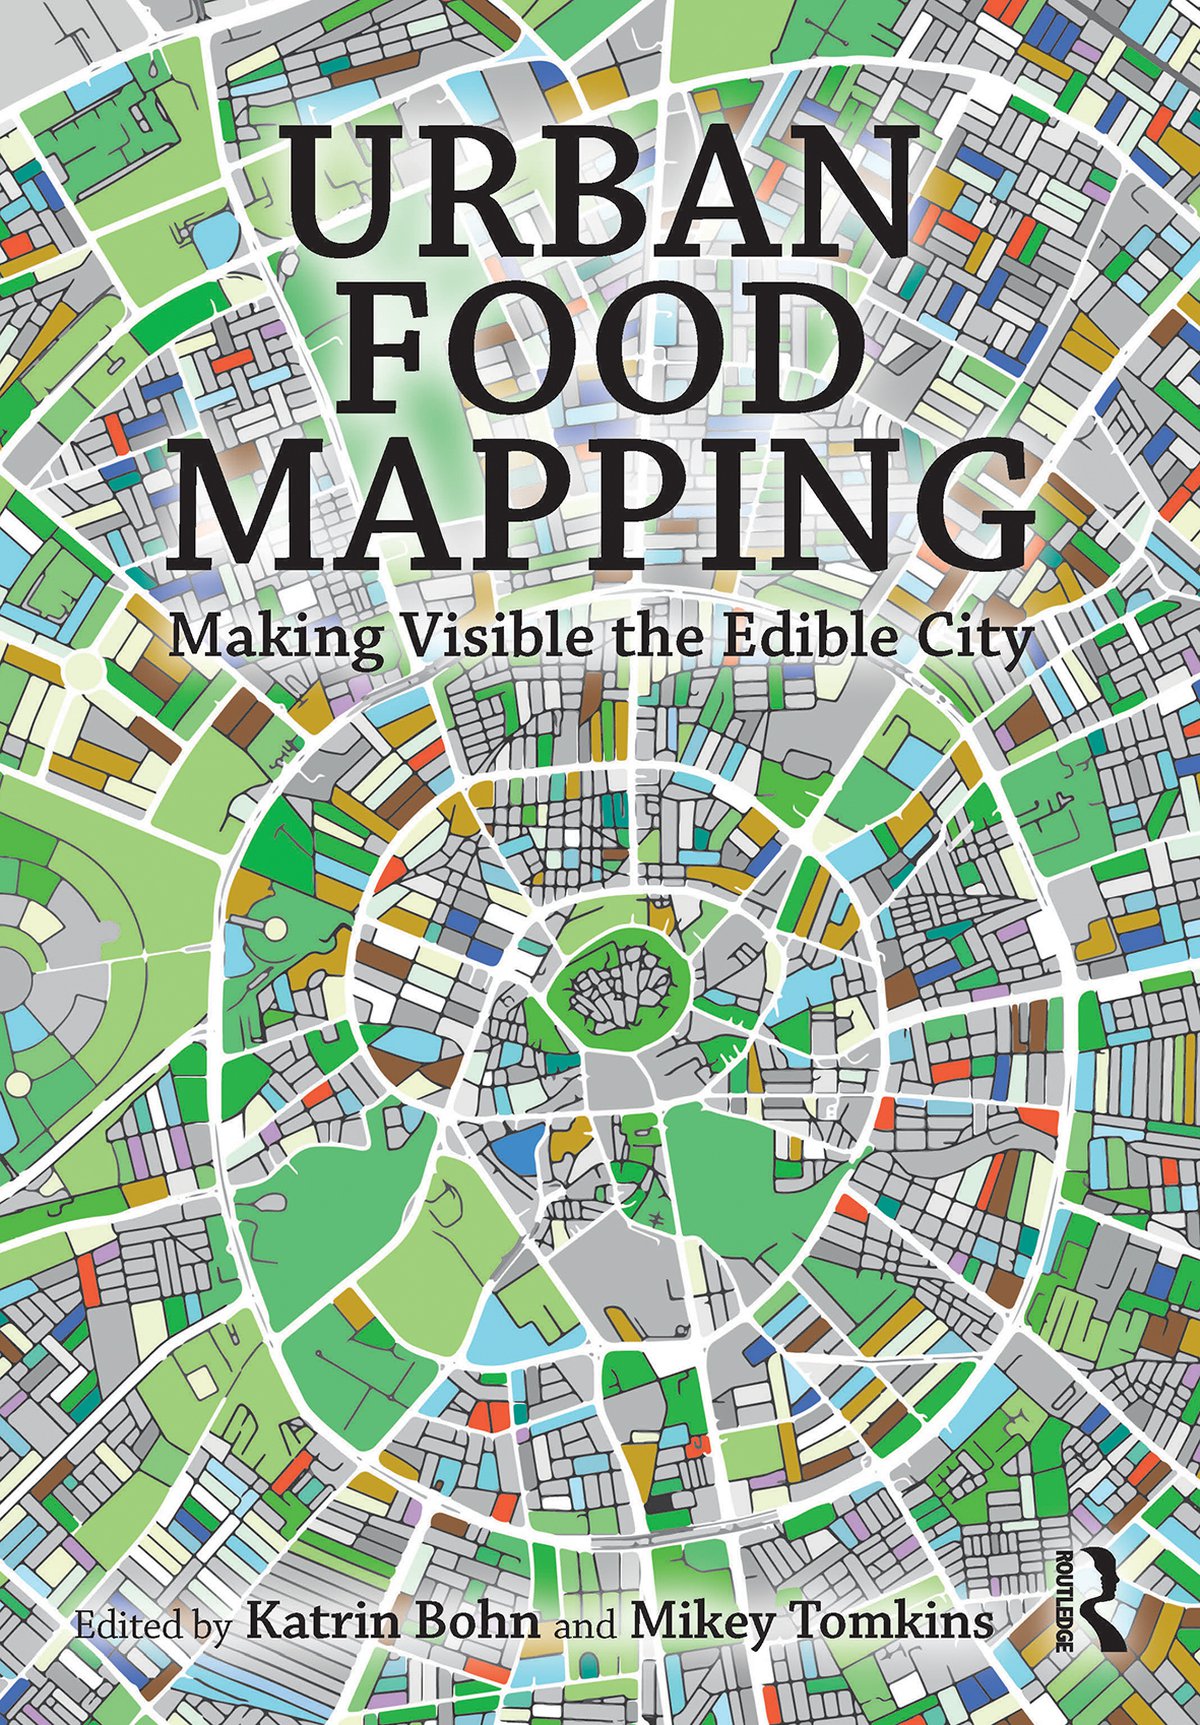 tomkins-routledge-urbanfoodmapping-cover-kl2mb-rgb-81661.jpg